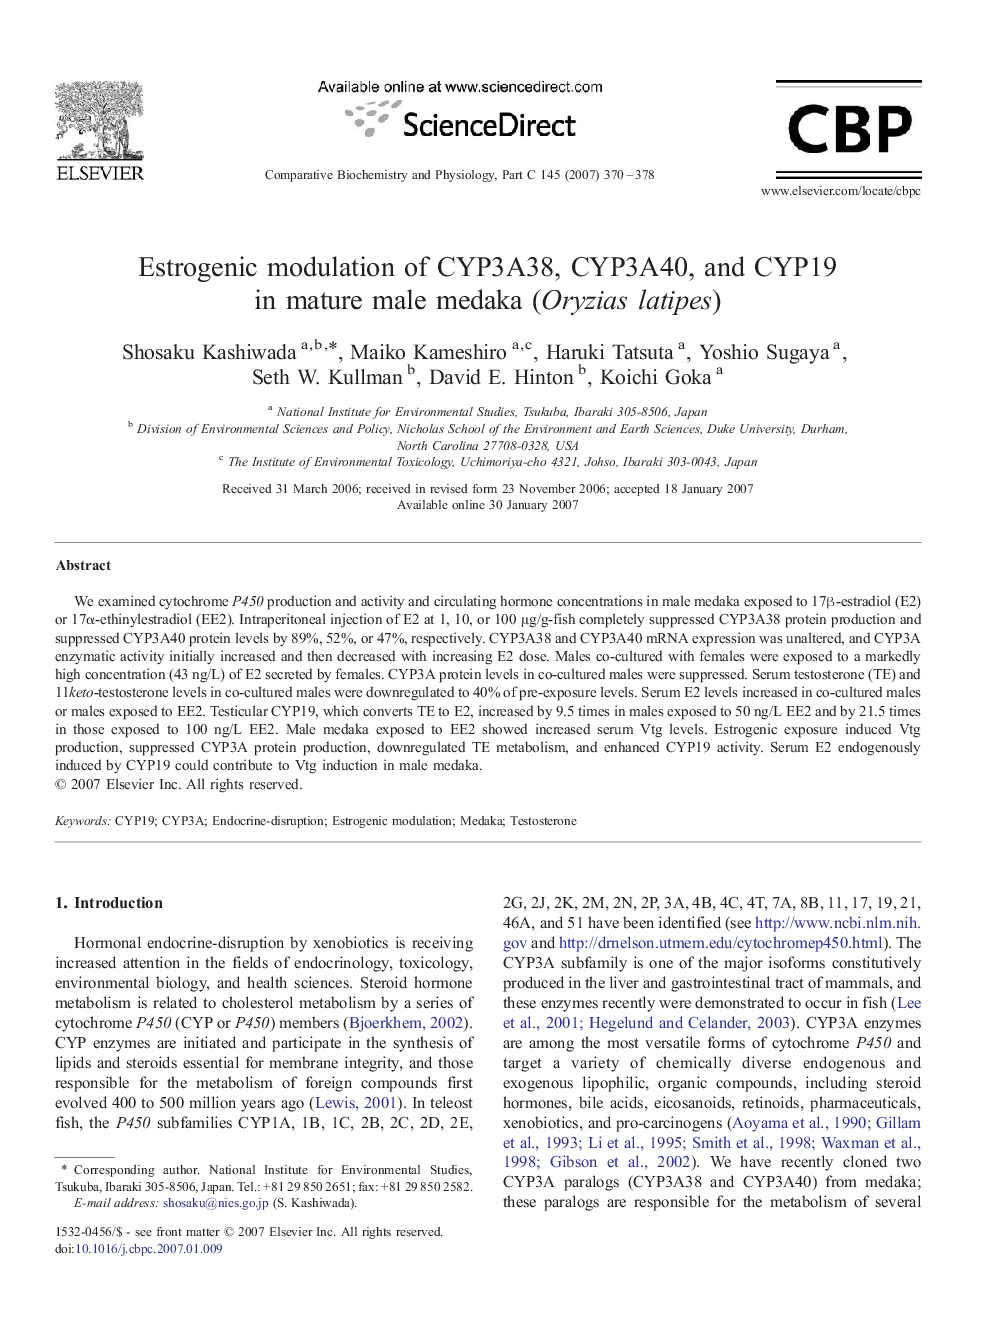 Estrogenic modulation of CYP3A38, CYP3A40, and CYP19 in mature male medaka (Oryzias latipes)